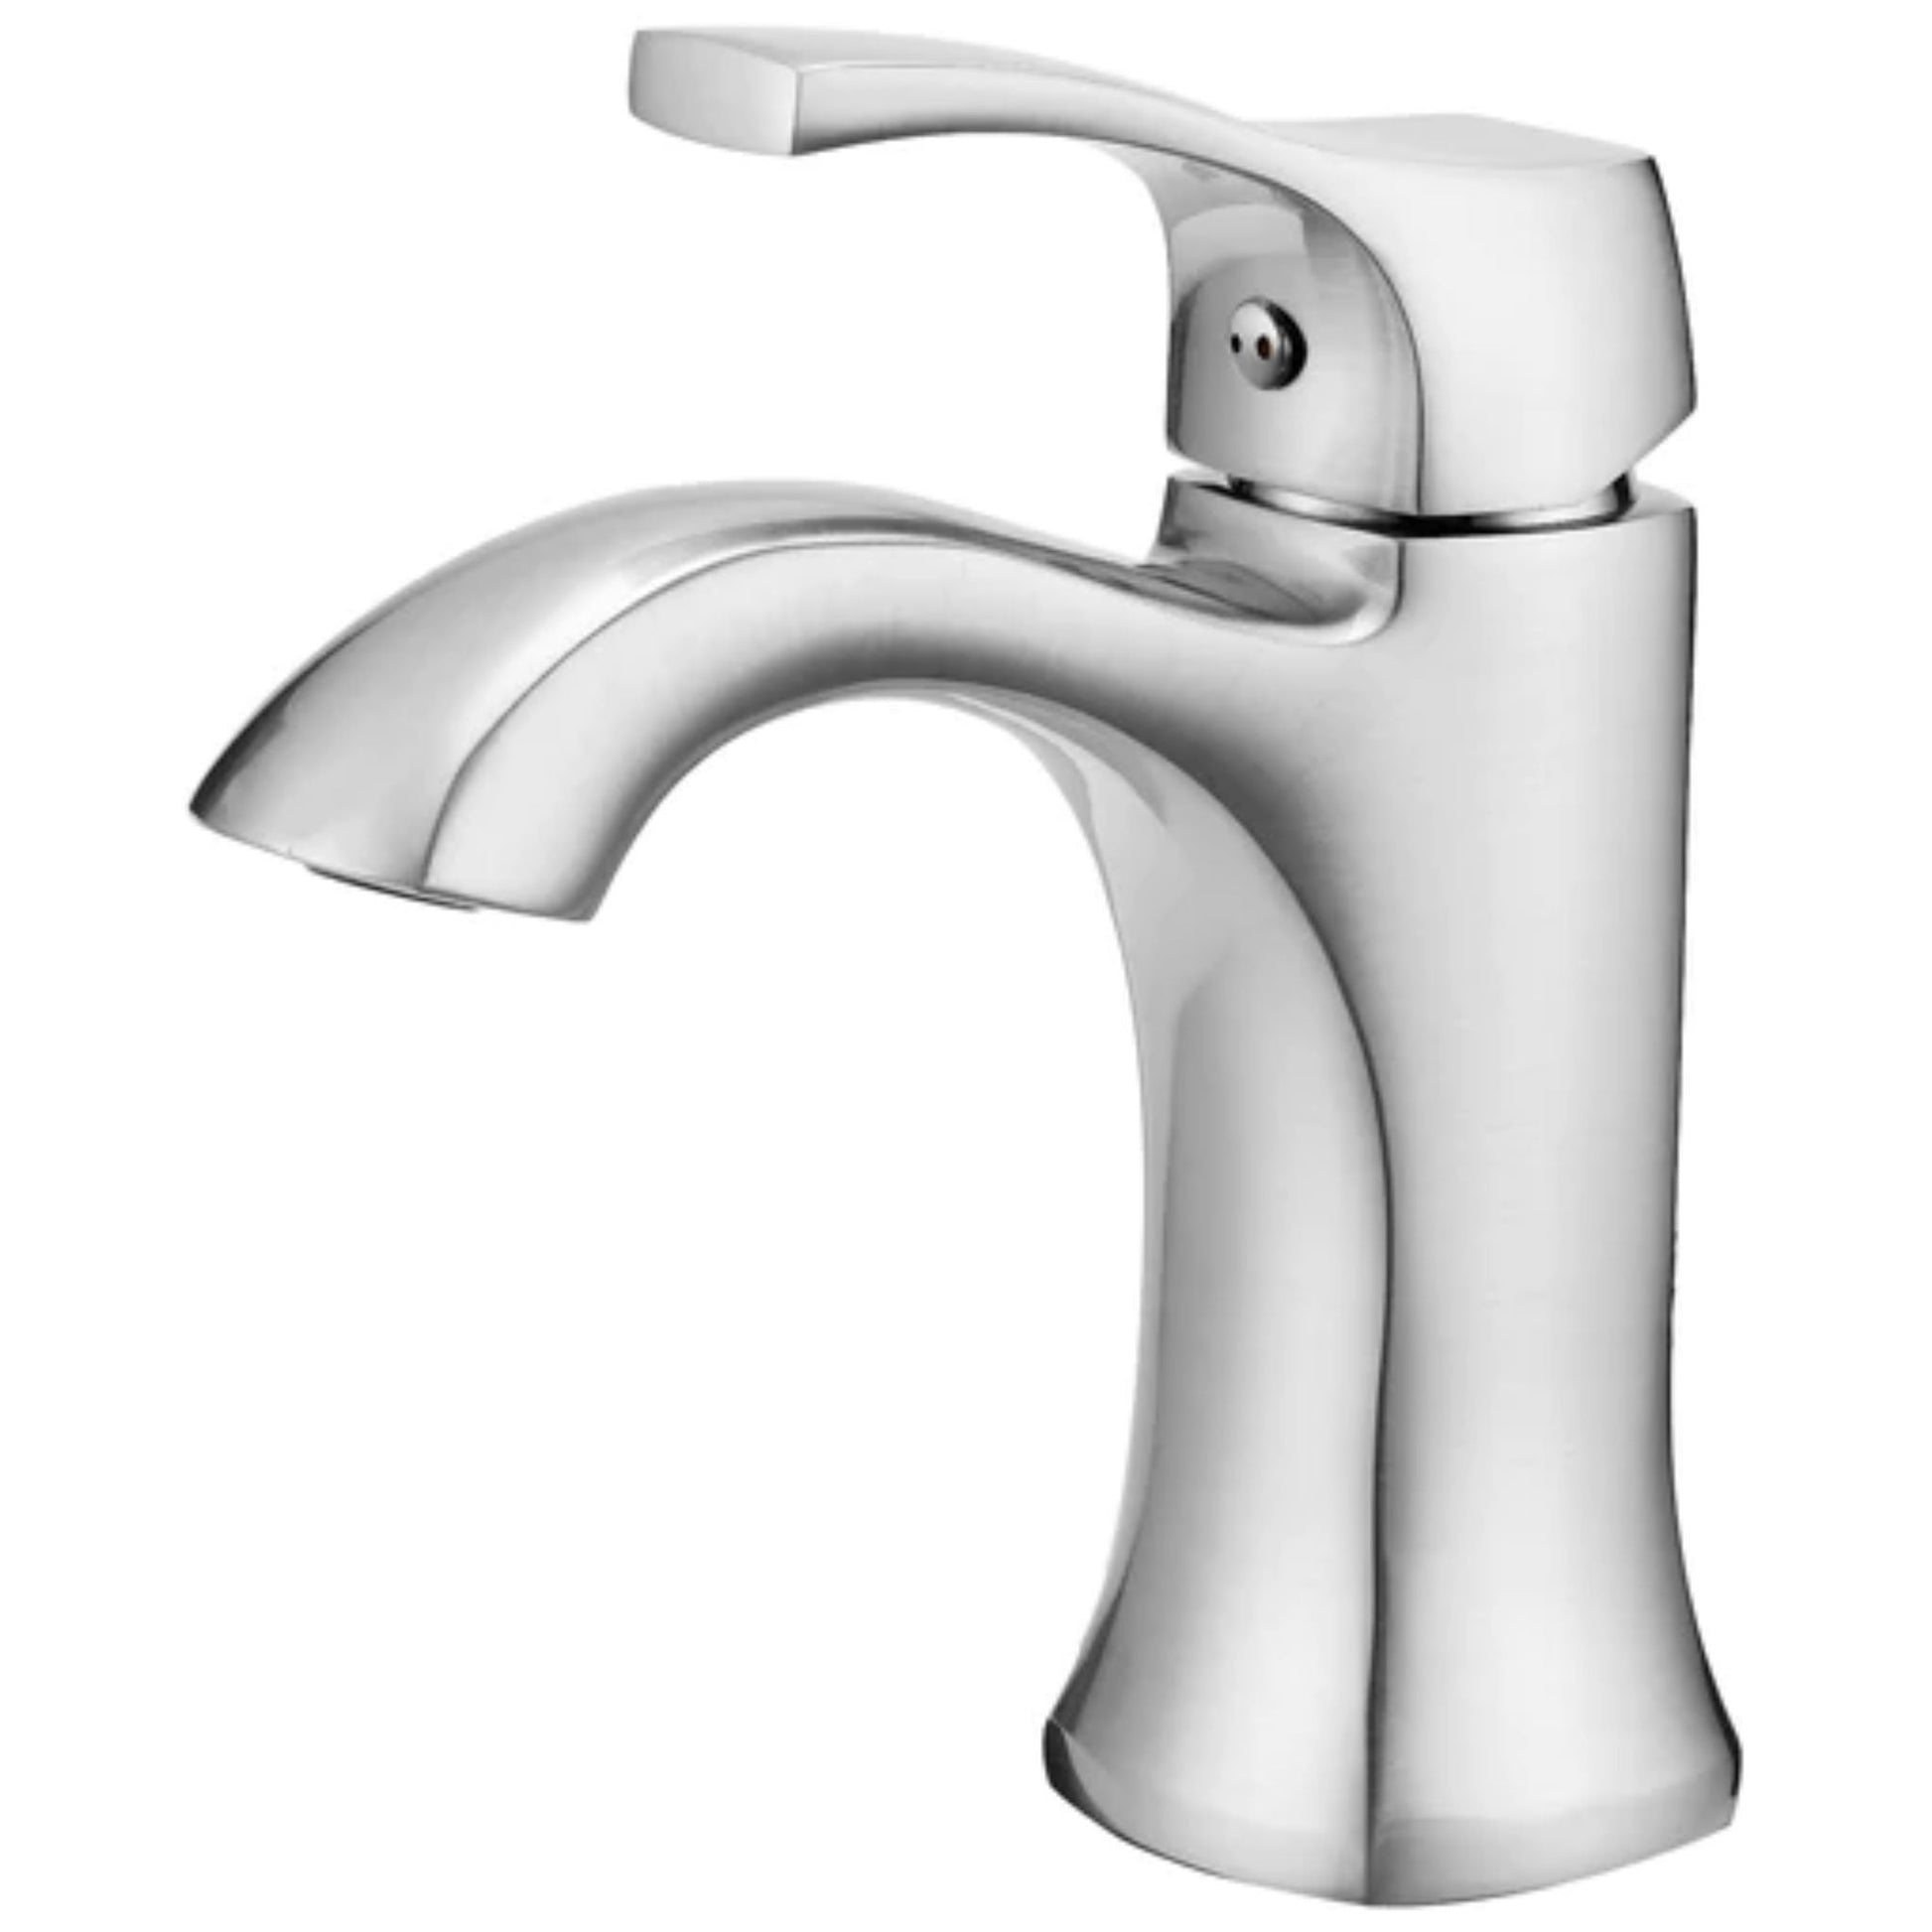 LessCare Brushed Nickel Modern Bathroom or Bar Faucet - LB21B